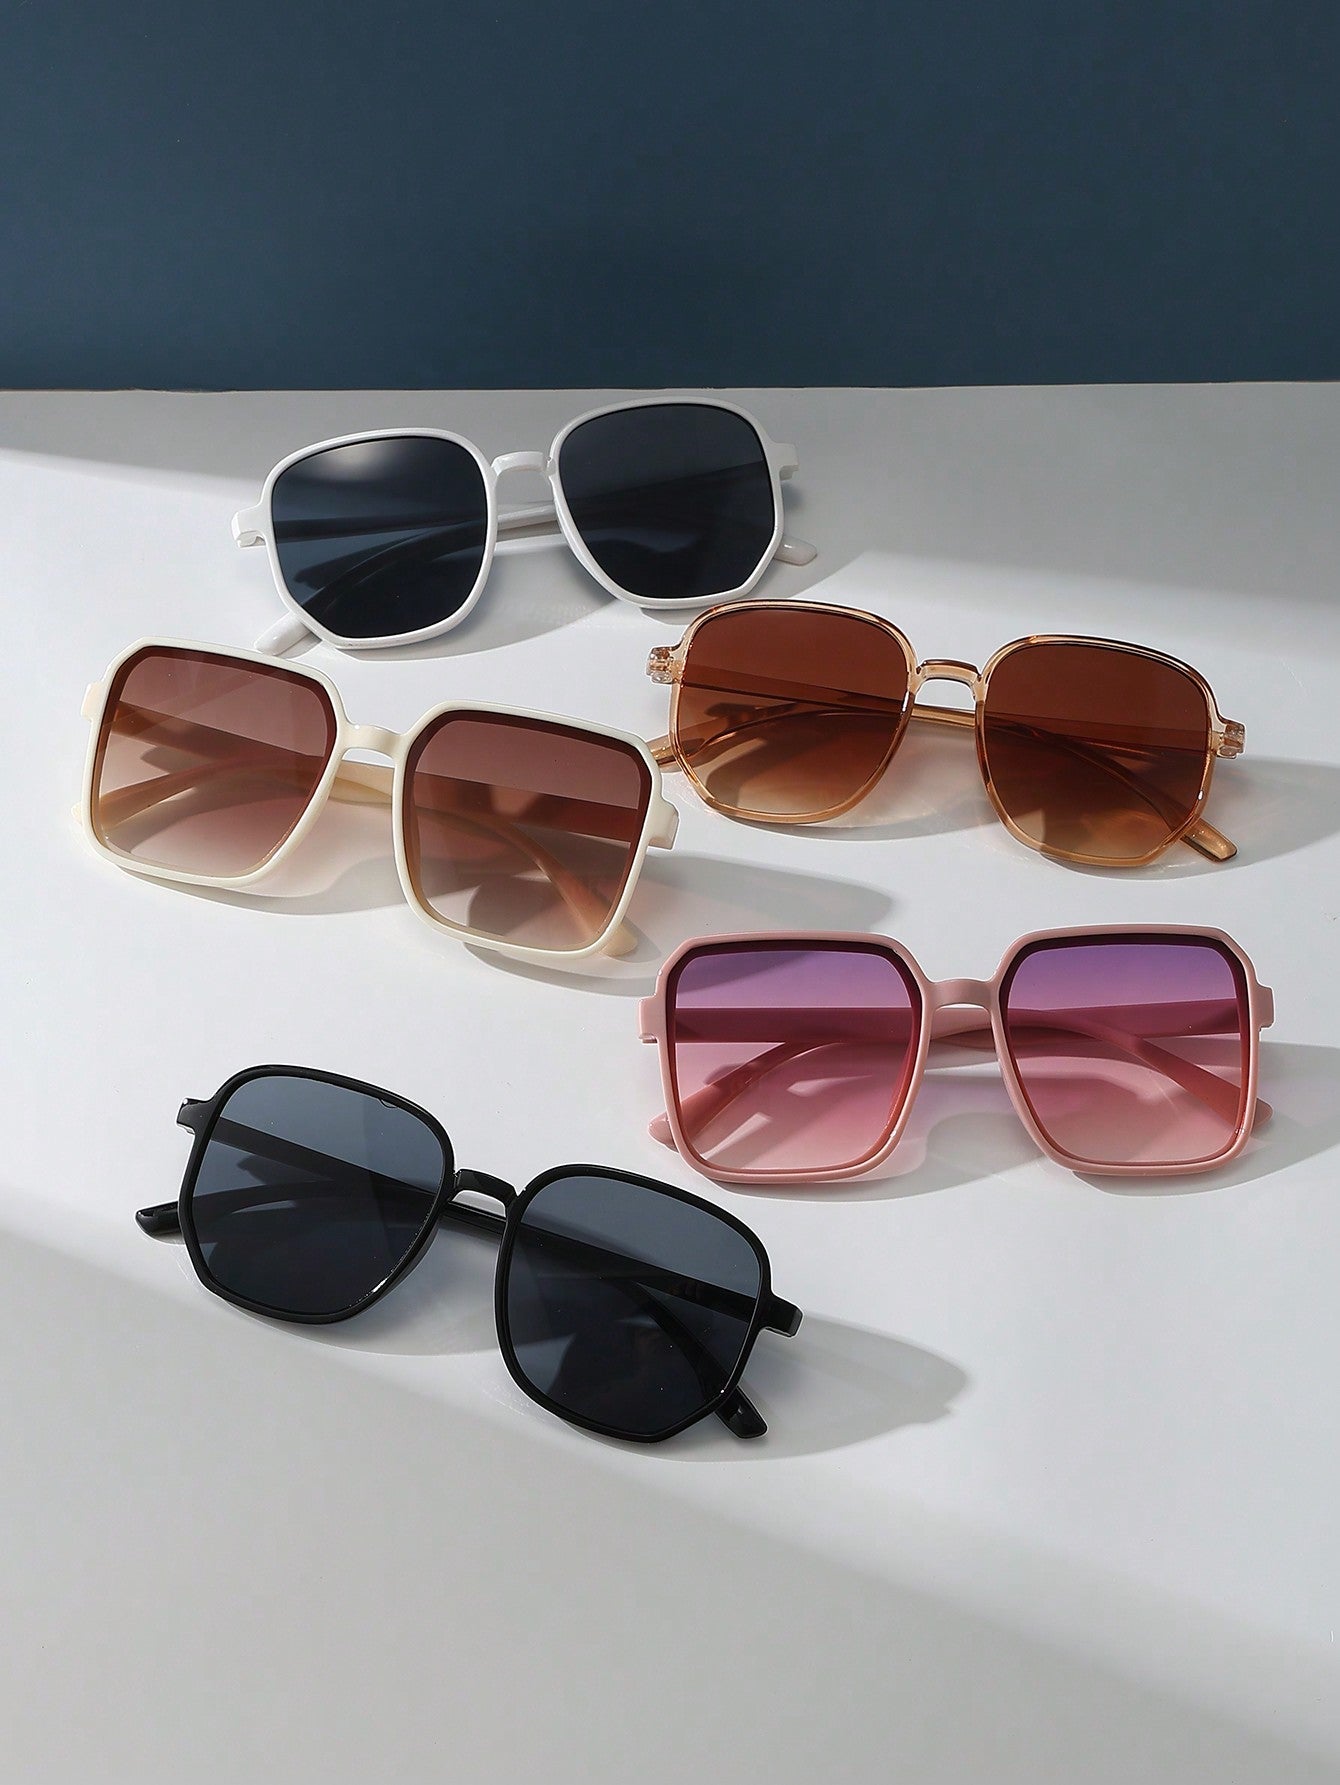 5pcs/set Unisex Retro Square Plastic Frame Fashion Sunglasses With Decorations